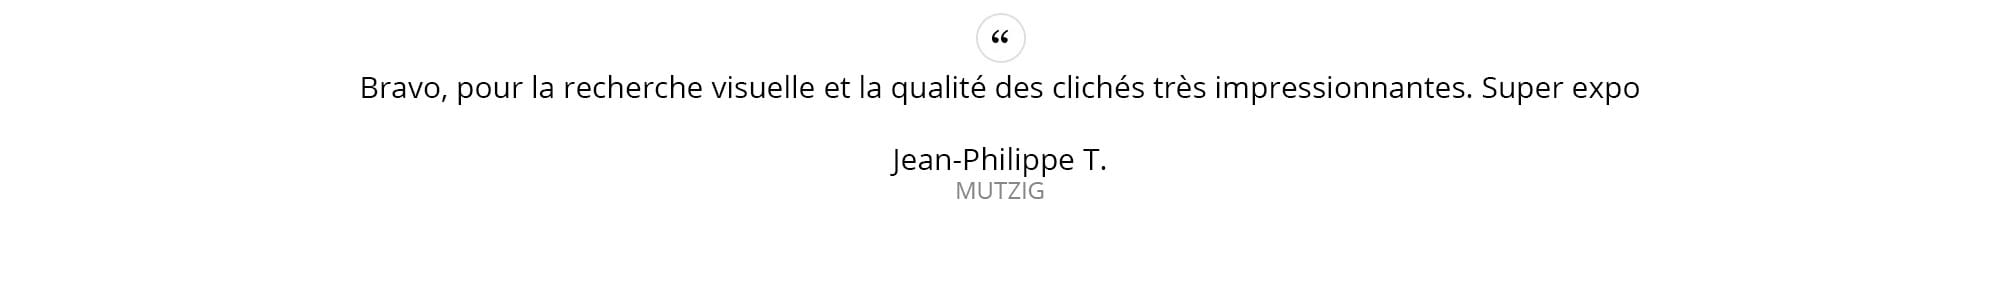 Jean-Philippe-T.---MUTZIG